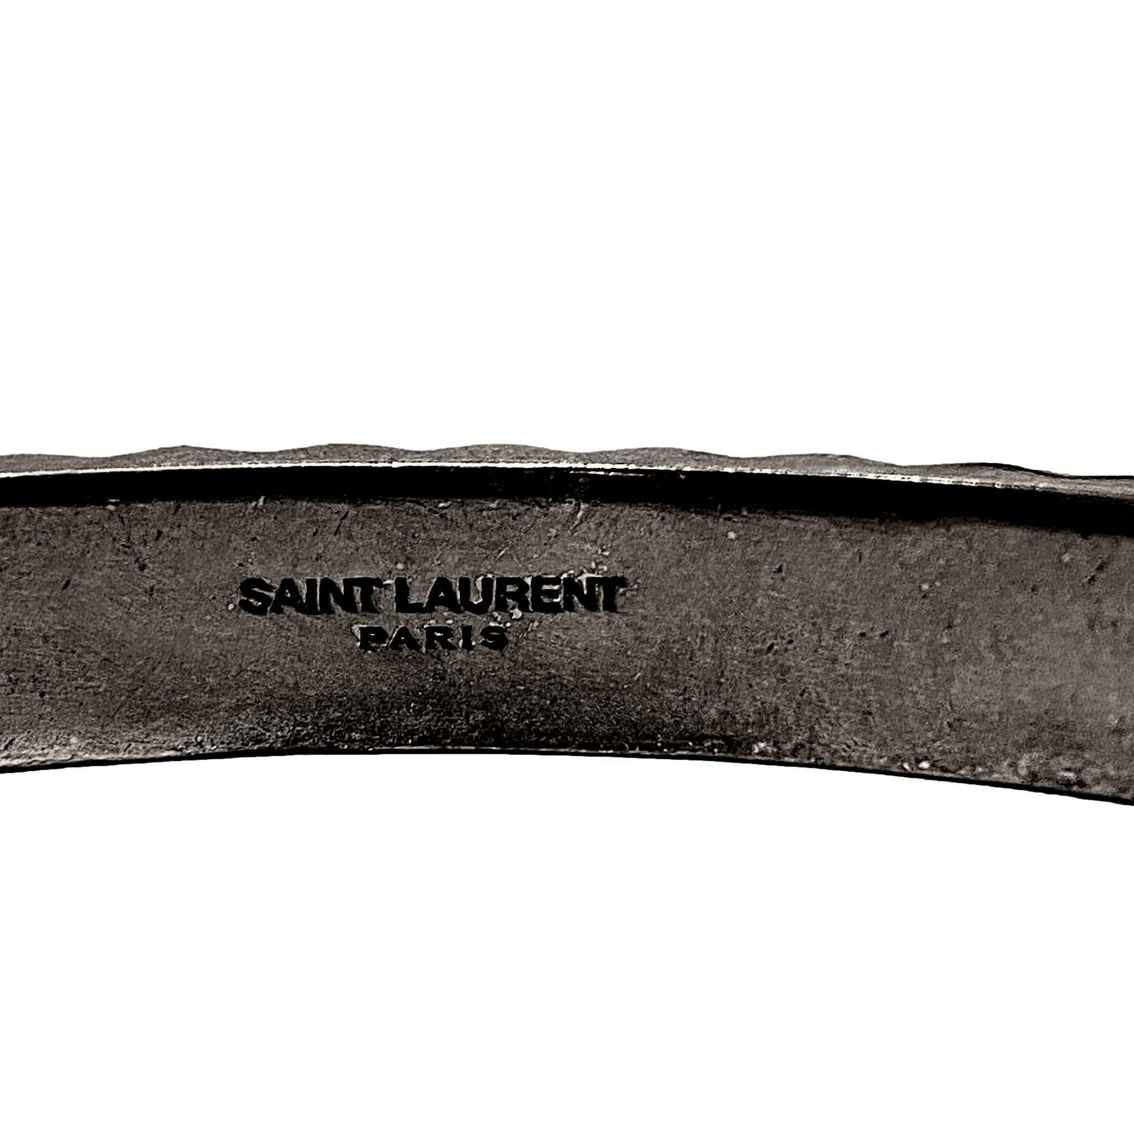 Saint Laurent Gear Dark Gunmetal Bracelet Medium (New) - Image 5 of 5